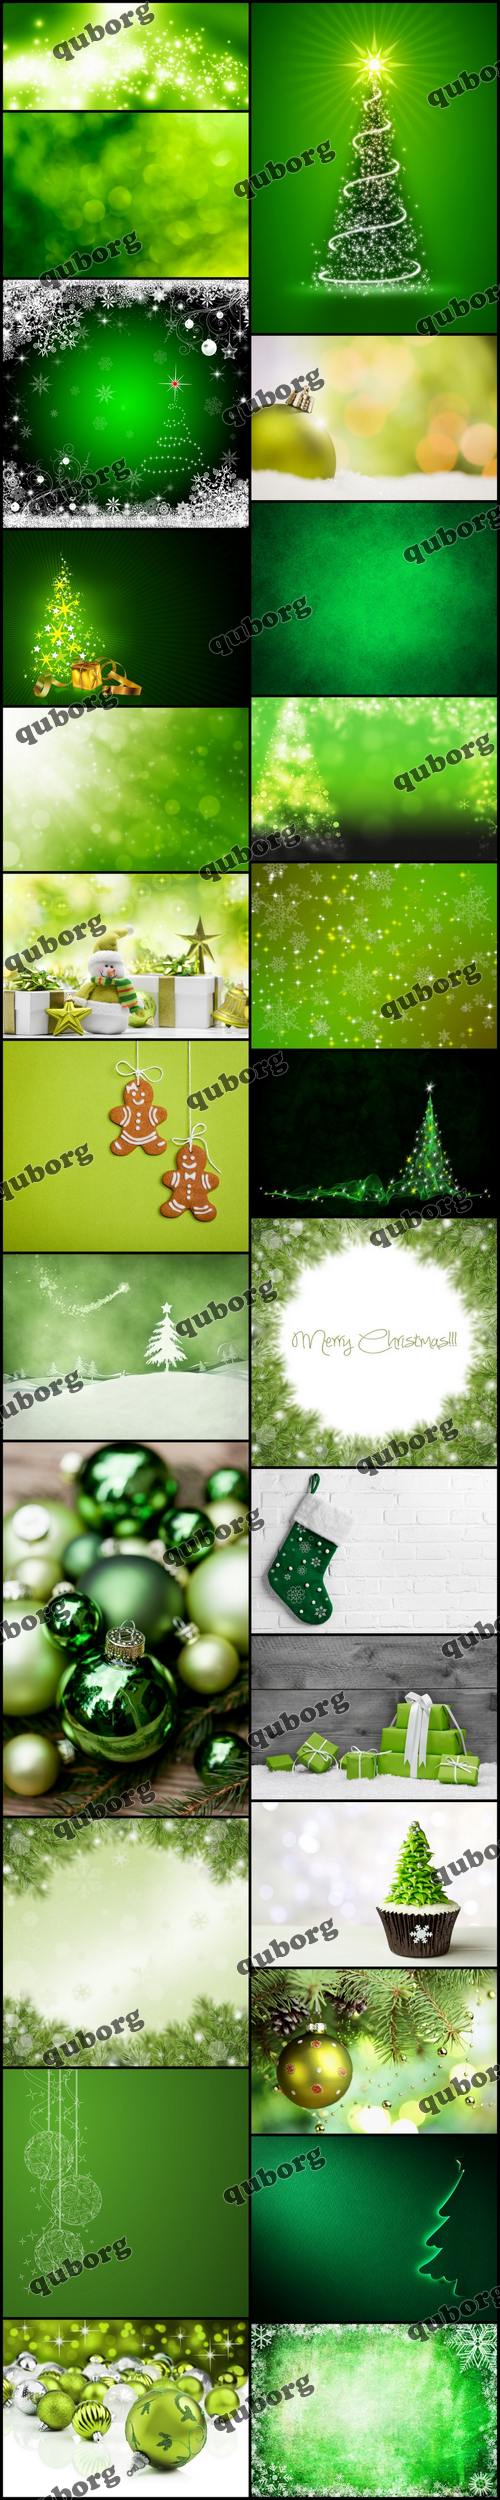 Stock Photos - Green Christmas Background